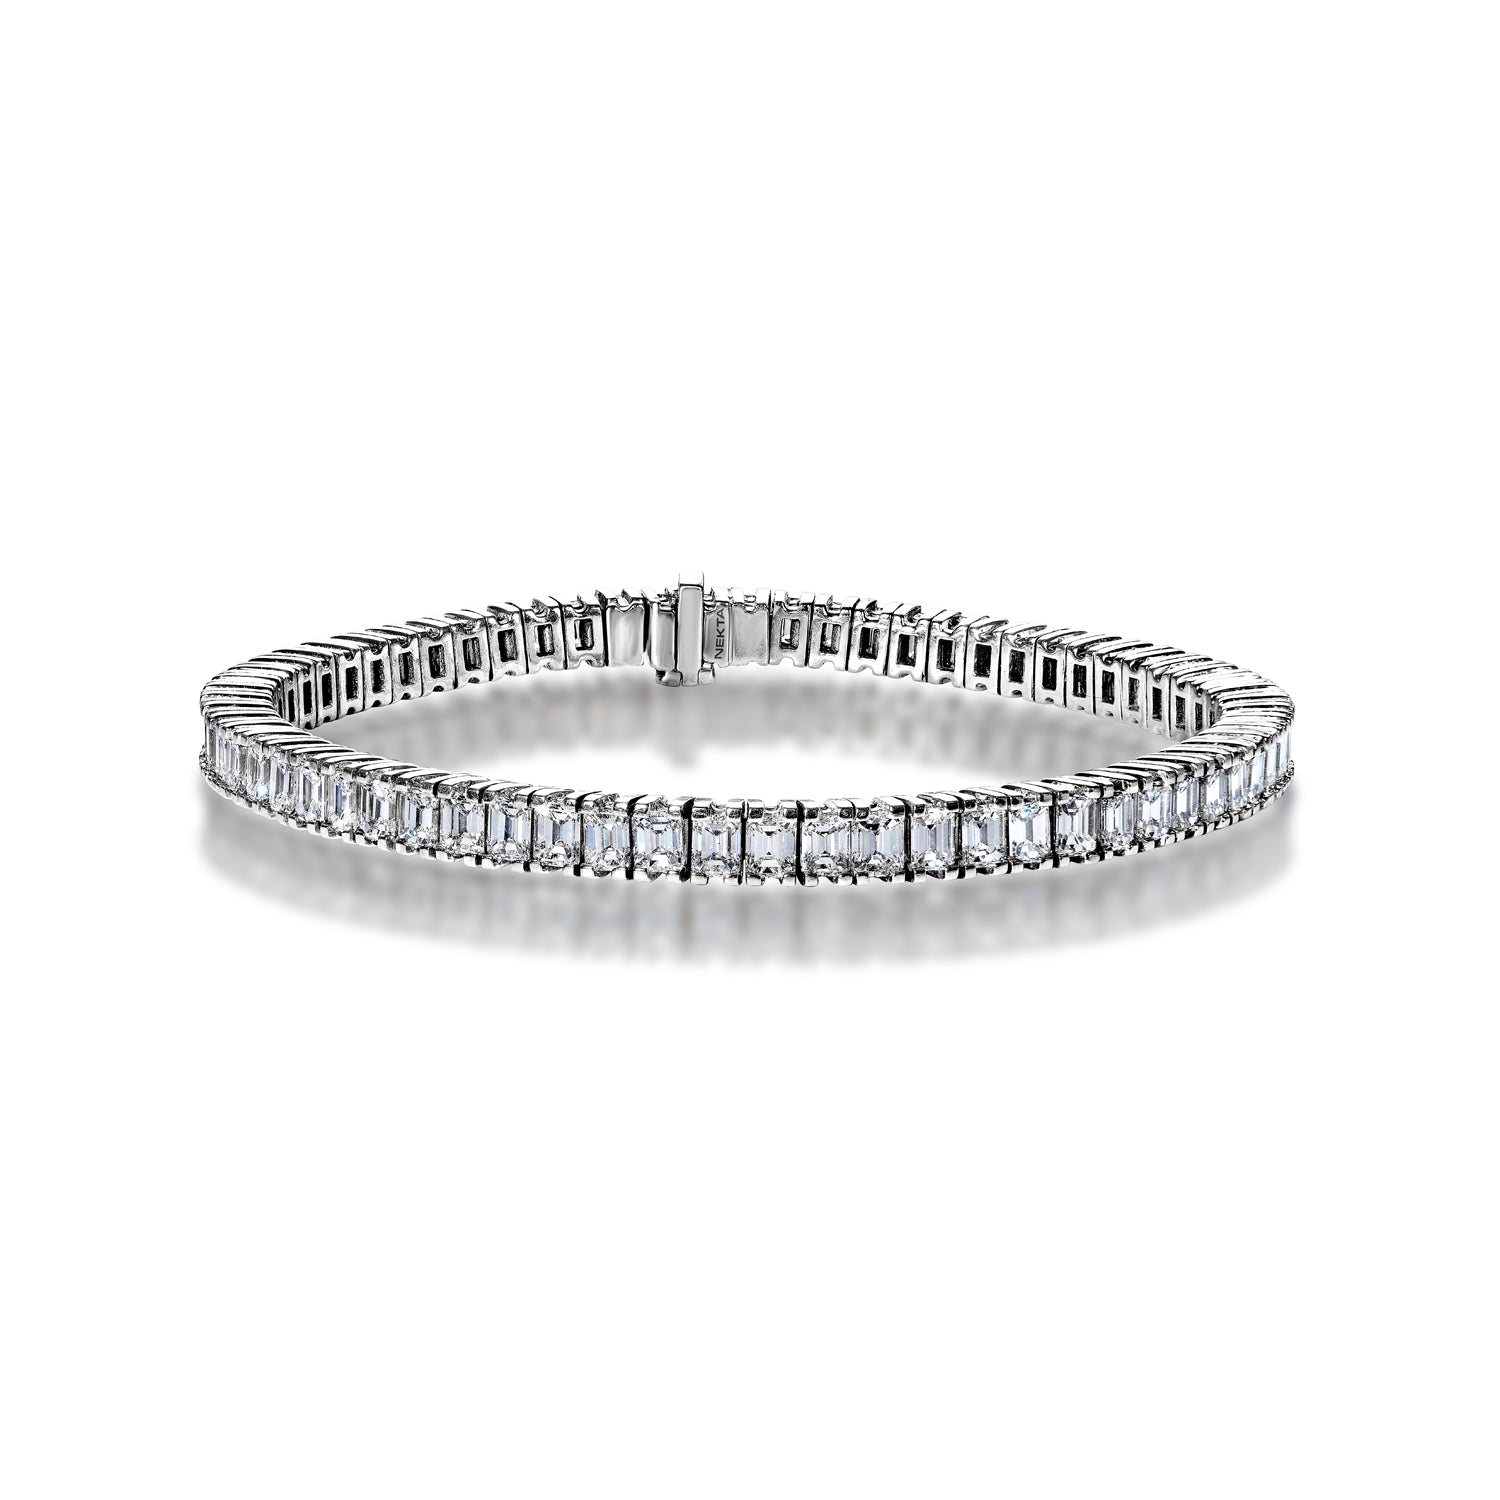 Tiffany and Co Platinum Diamond Victoria Bracelet 653 Carat  Tennis  bracelet diamond Diamond bracelet design Diamond bracelets